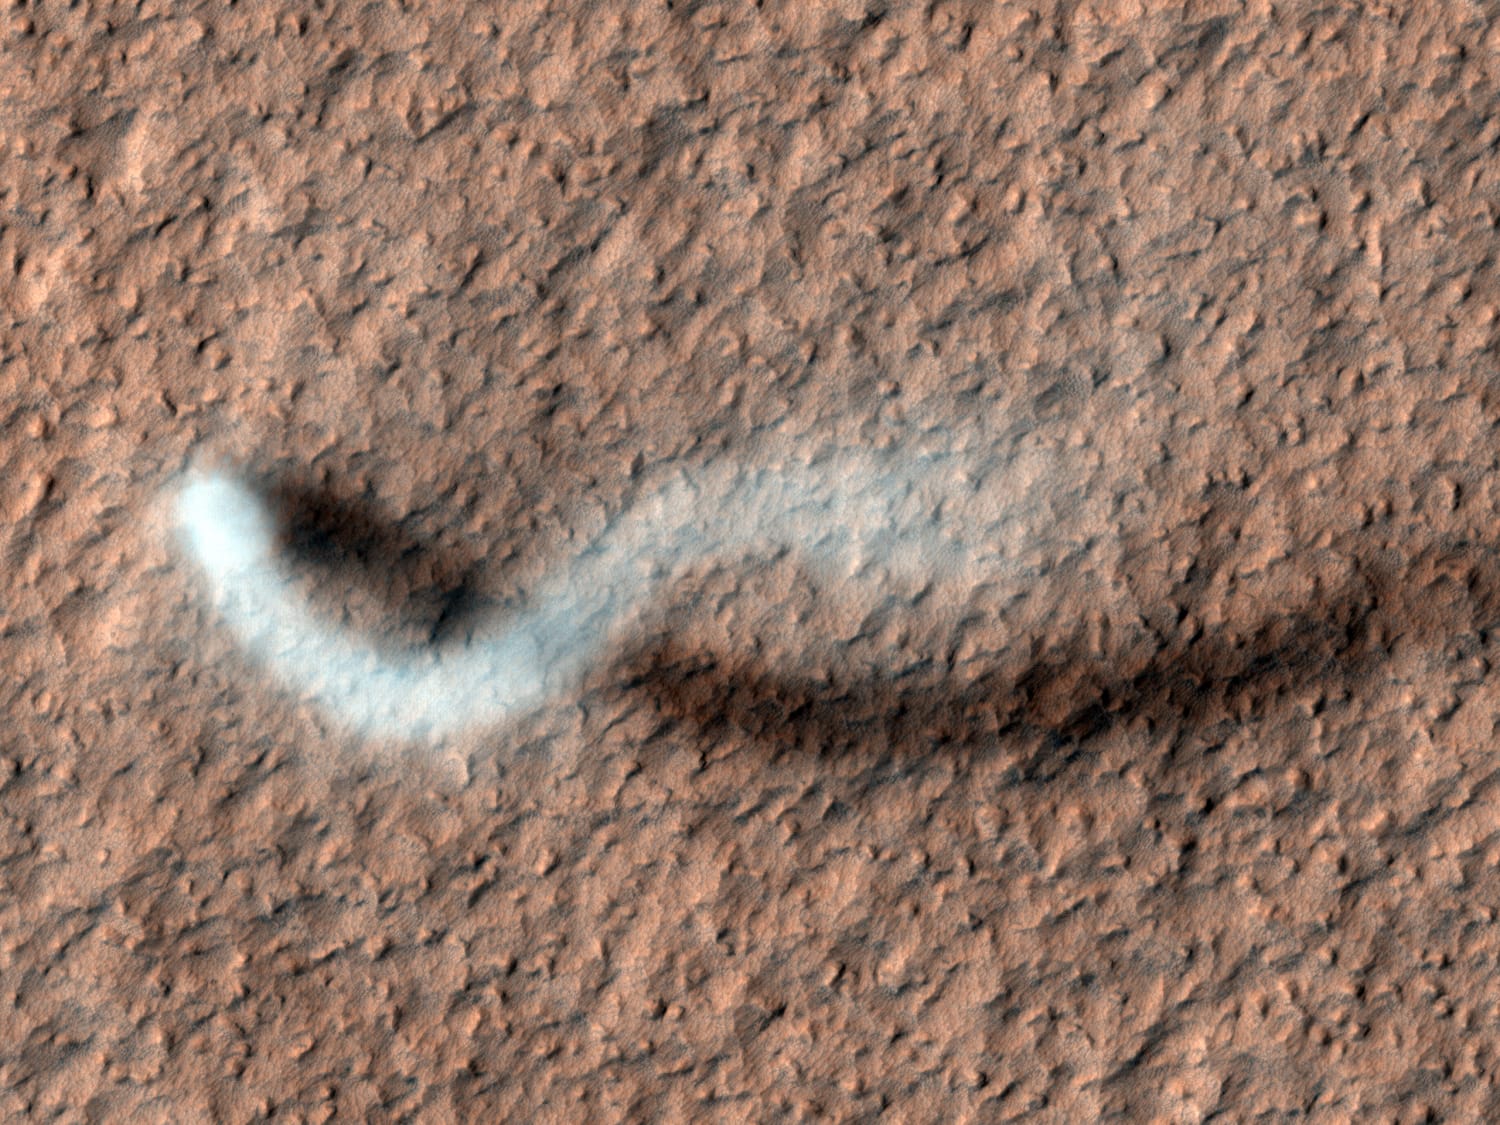 A Dust Devil on Mars